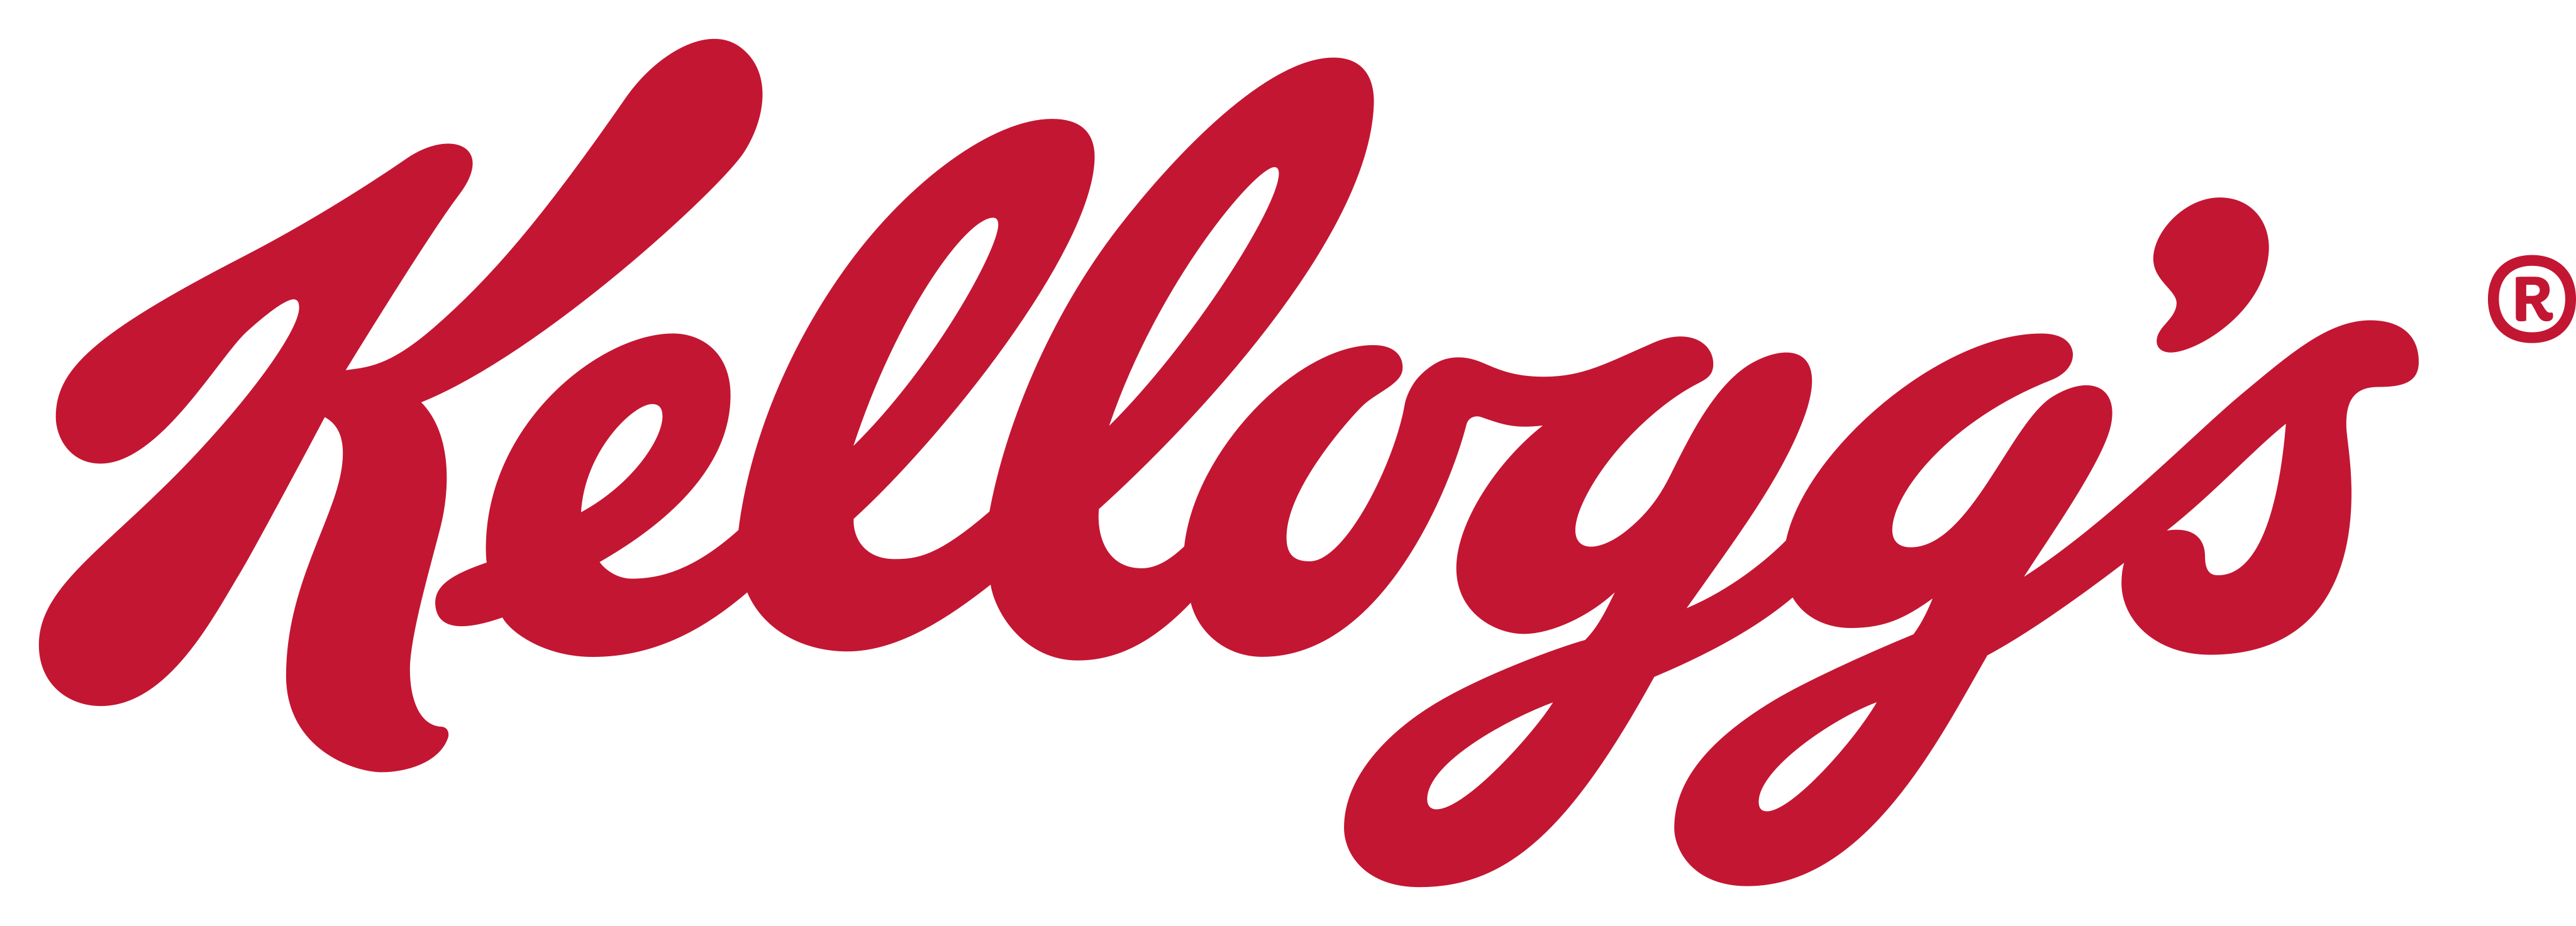 Kellogg’s Logo PNG Clipart